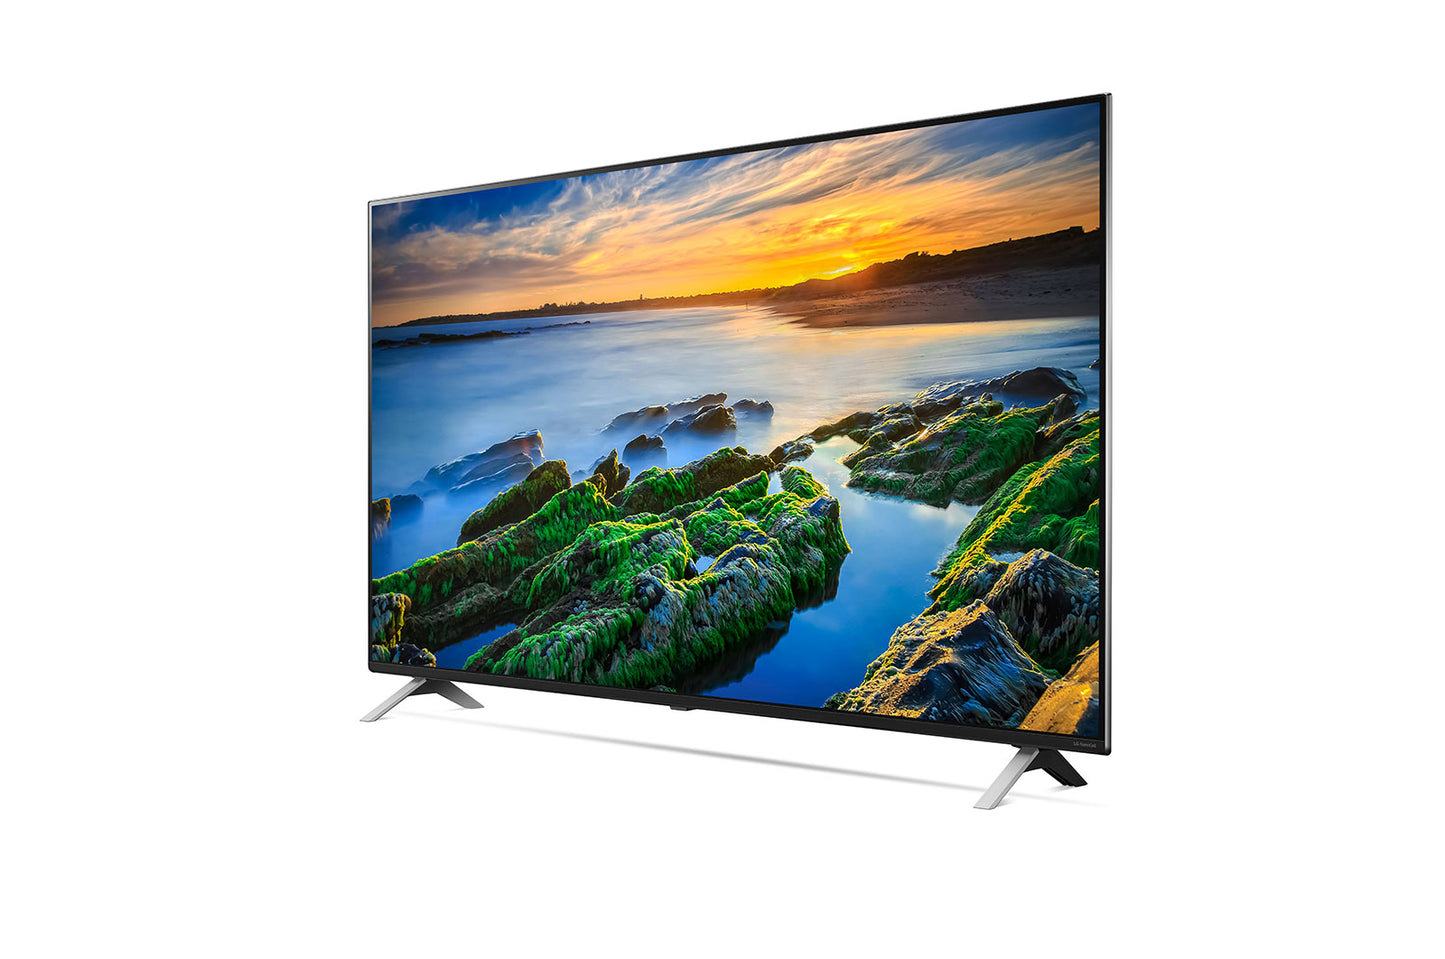 LG 55-in 4K Nano UHD TM240 ThinQ AI LED TV W/ A7 Gen 3 Intelligent Processor